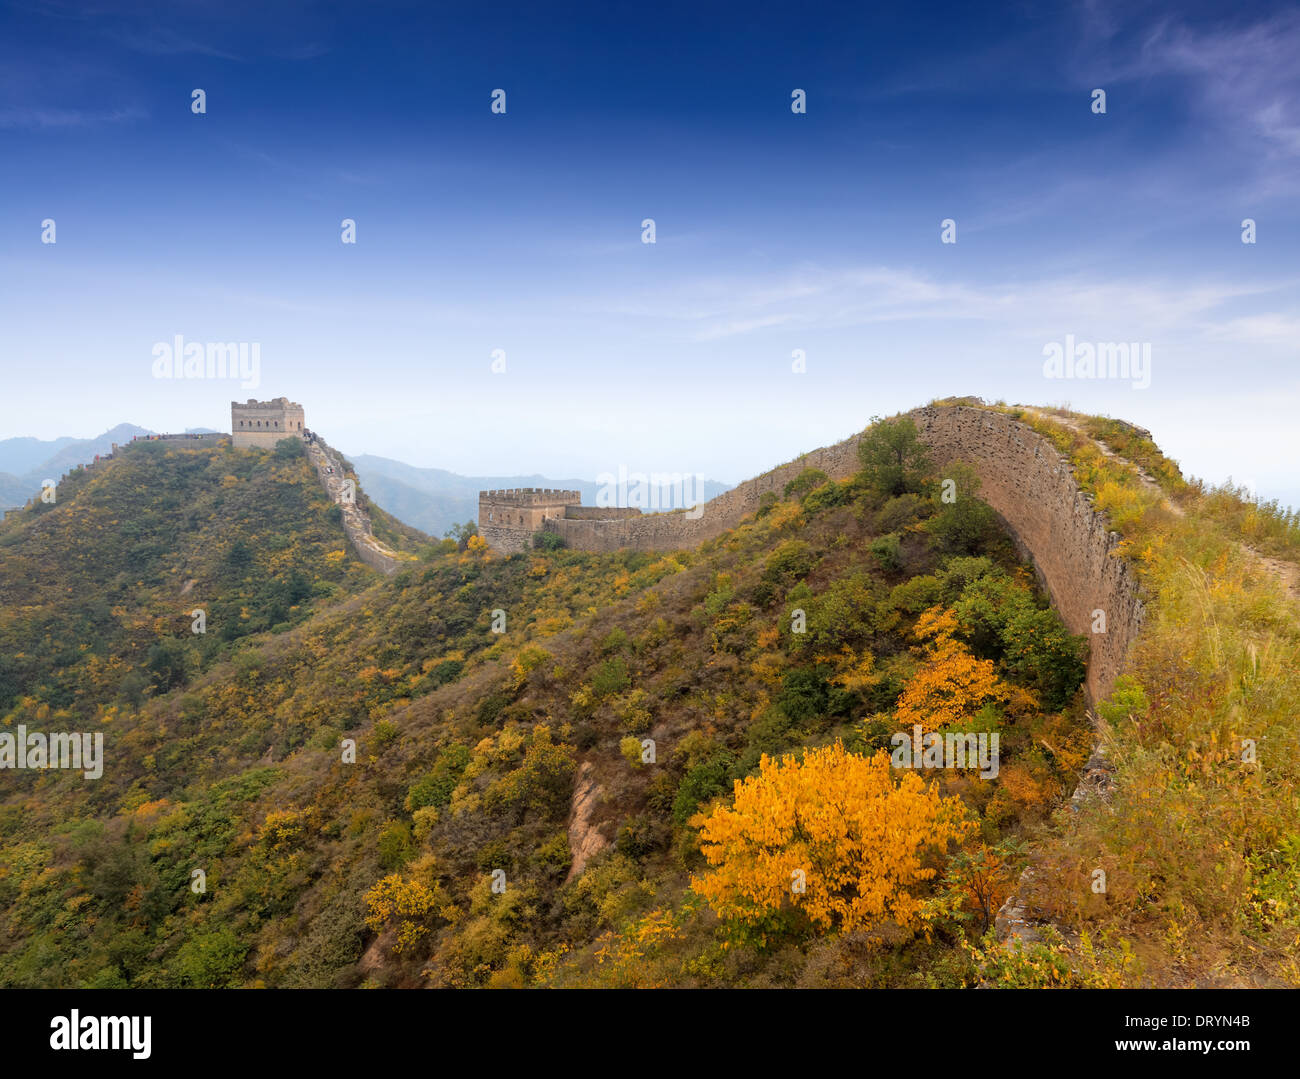 the great wall autumn scenery Stock Photo